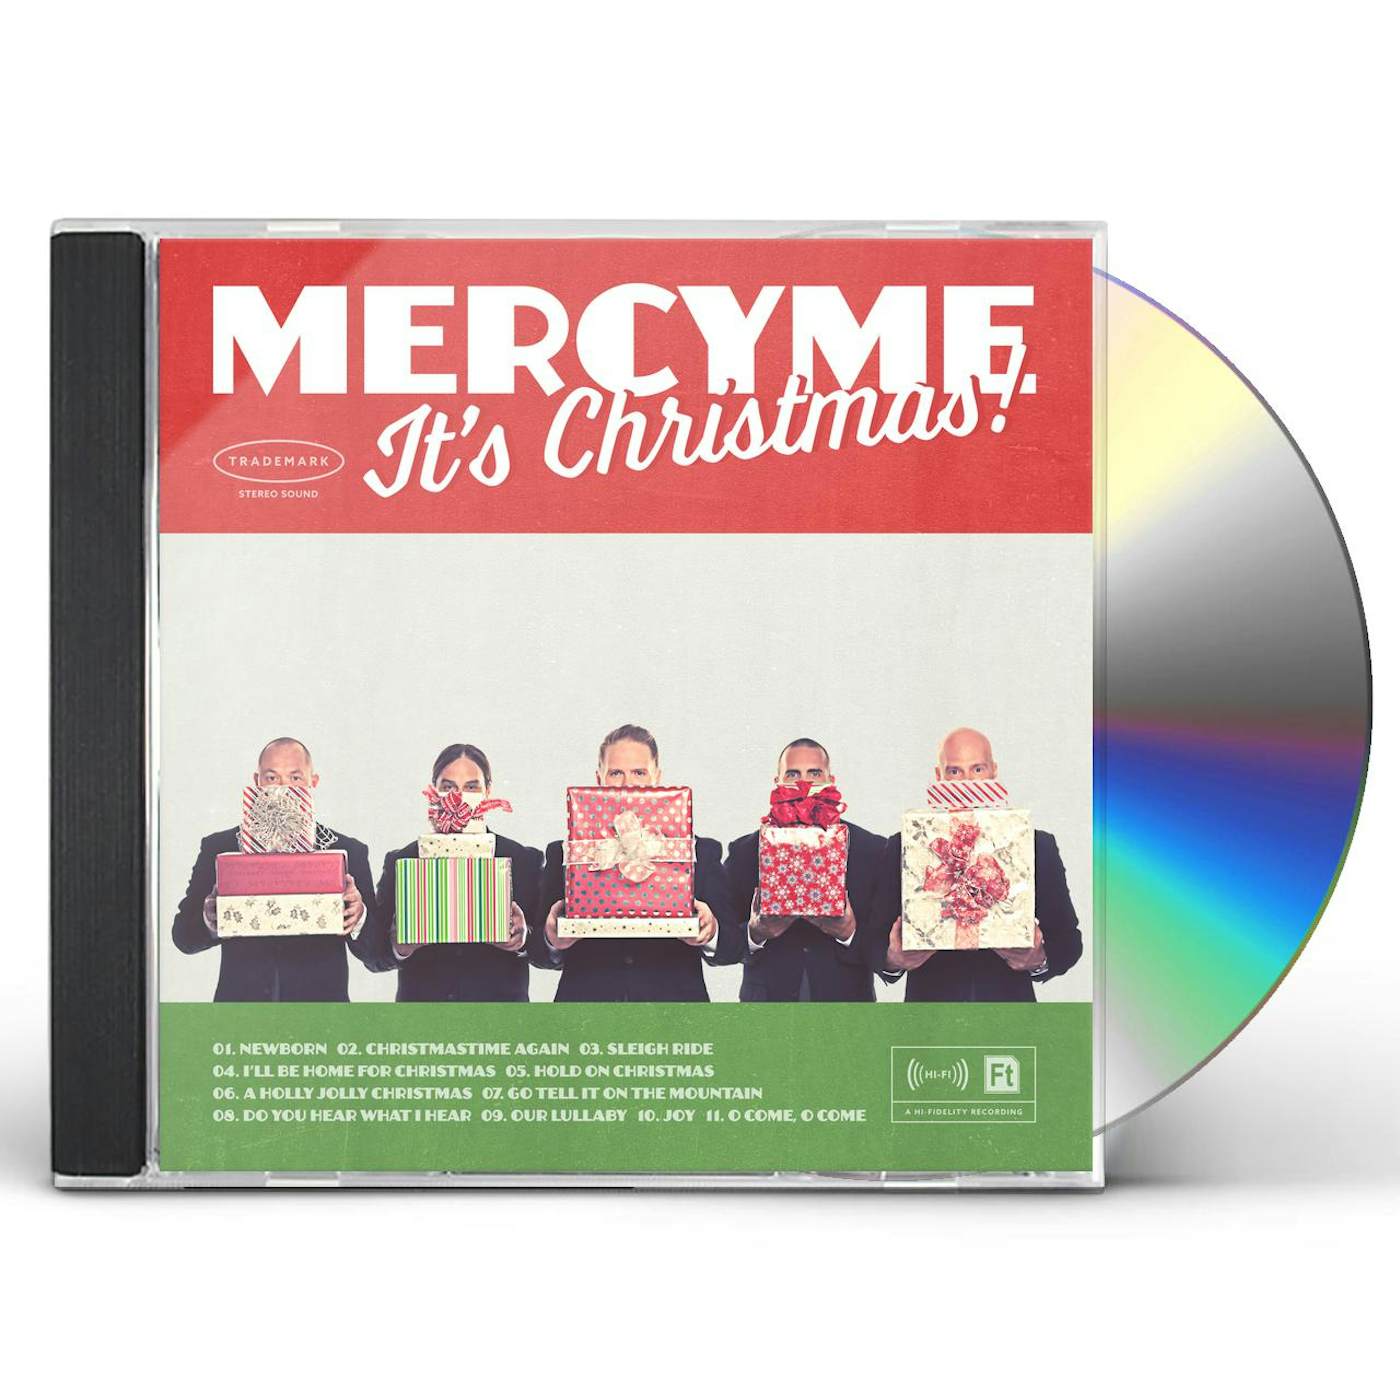 MERCYME IT'S CHRISTMAS CD